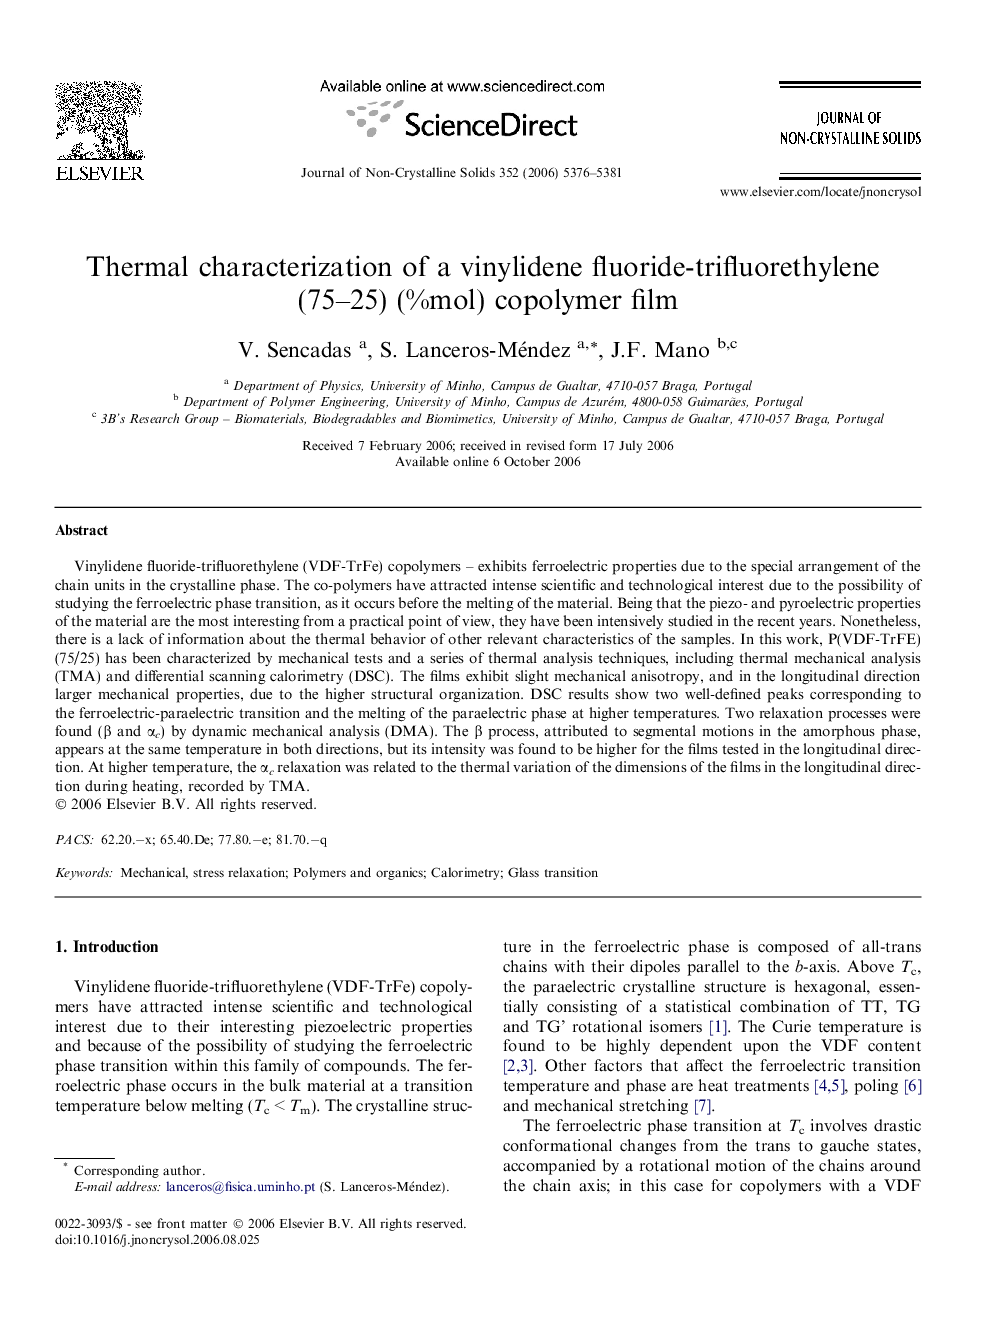 Thermal characterization of a vinylidene fluoride-trifluorethylene (75–25) (%mol) copolymer film